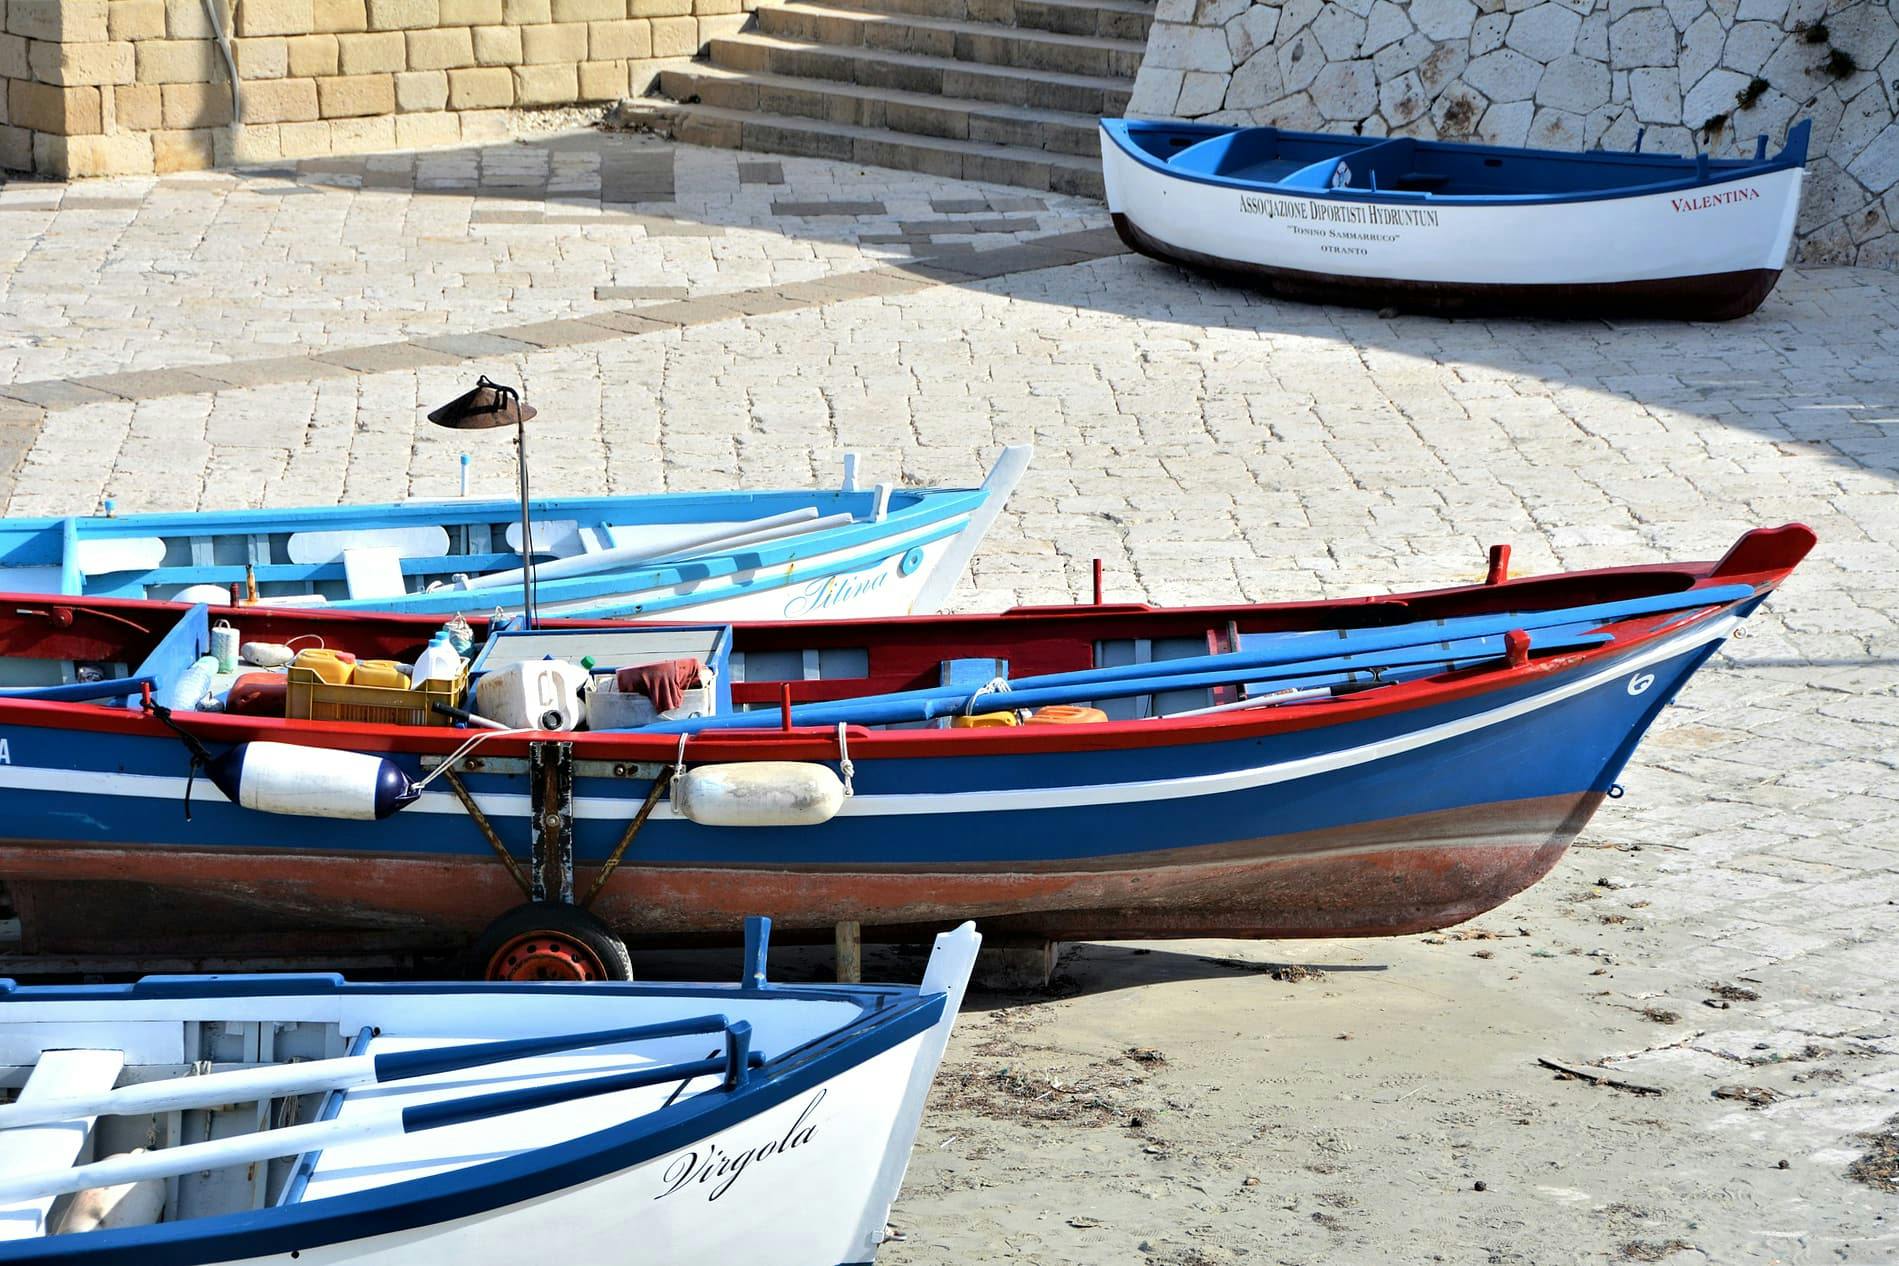 Otranto Half-day Tour from Salento – Adriatic Coast